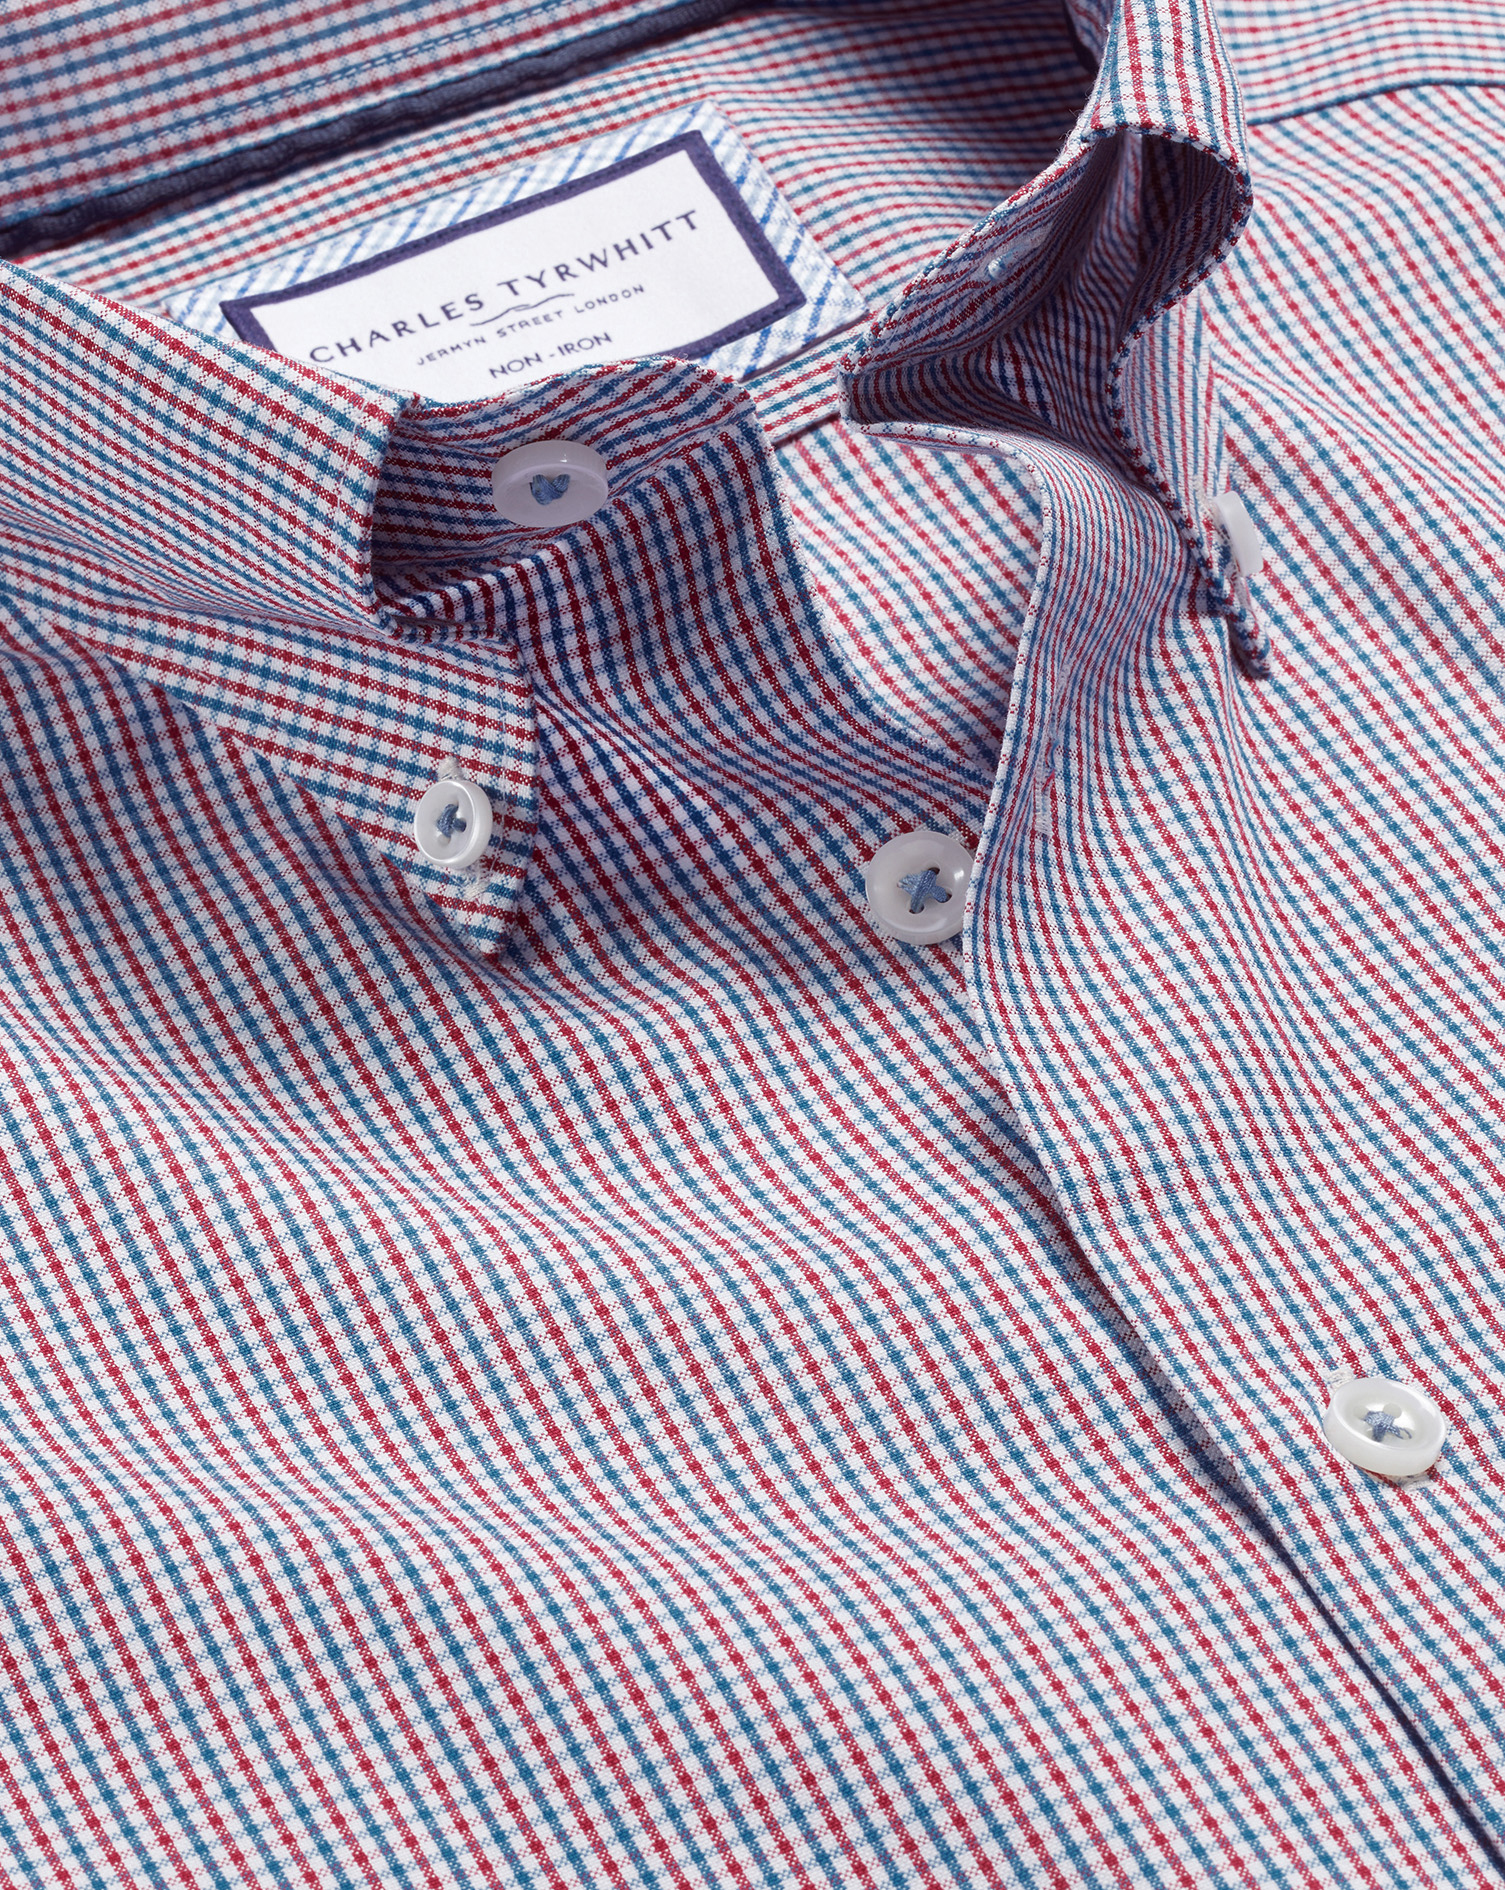 Men's Charles Tyrwhitt Button-Down Collar Non-Iron Gingham Check Dress Shirt - Red Single Cuff Size 